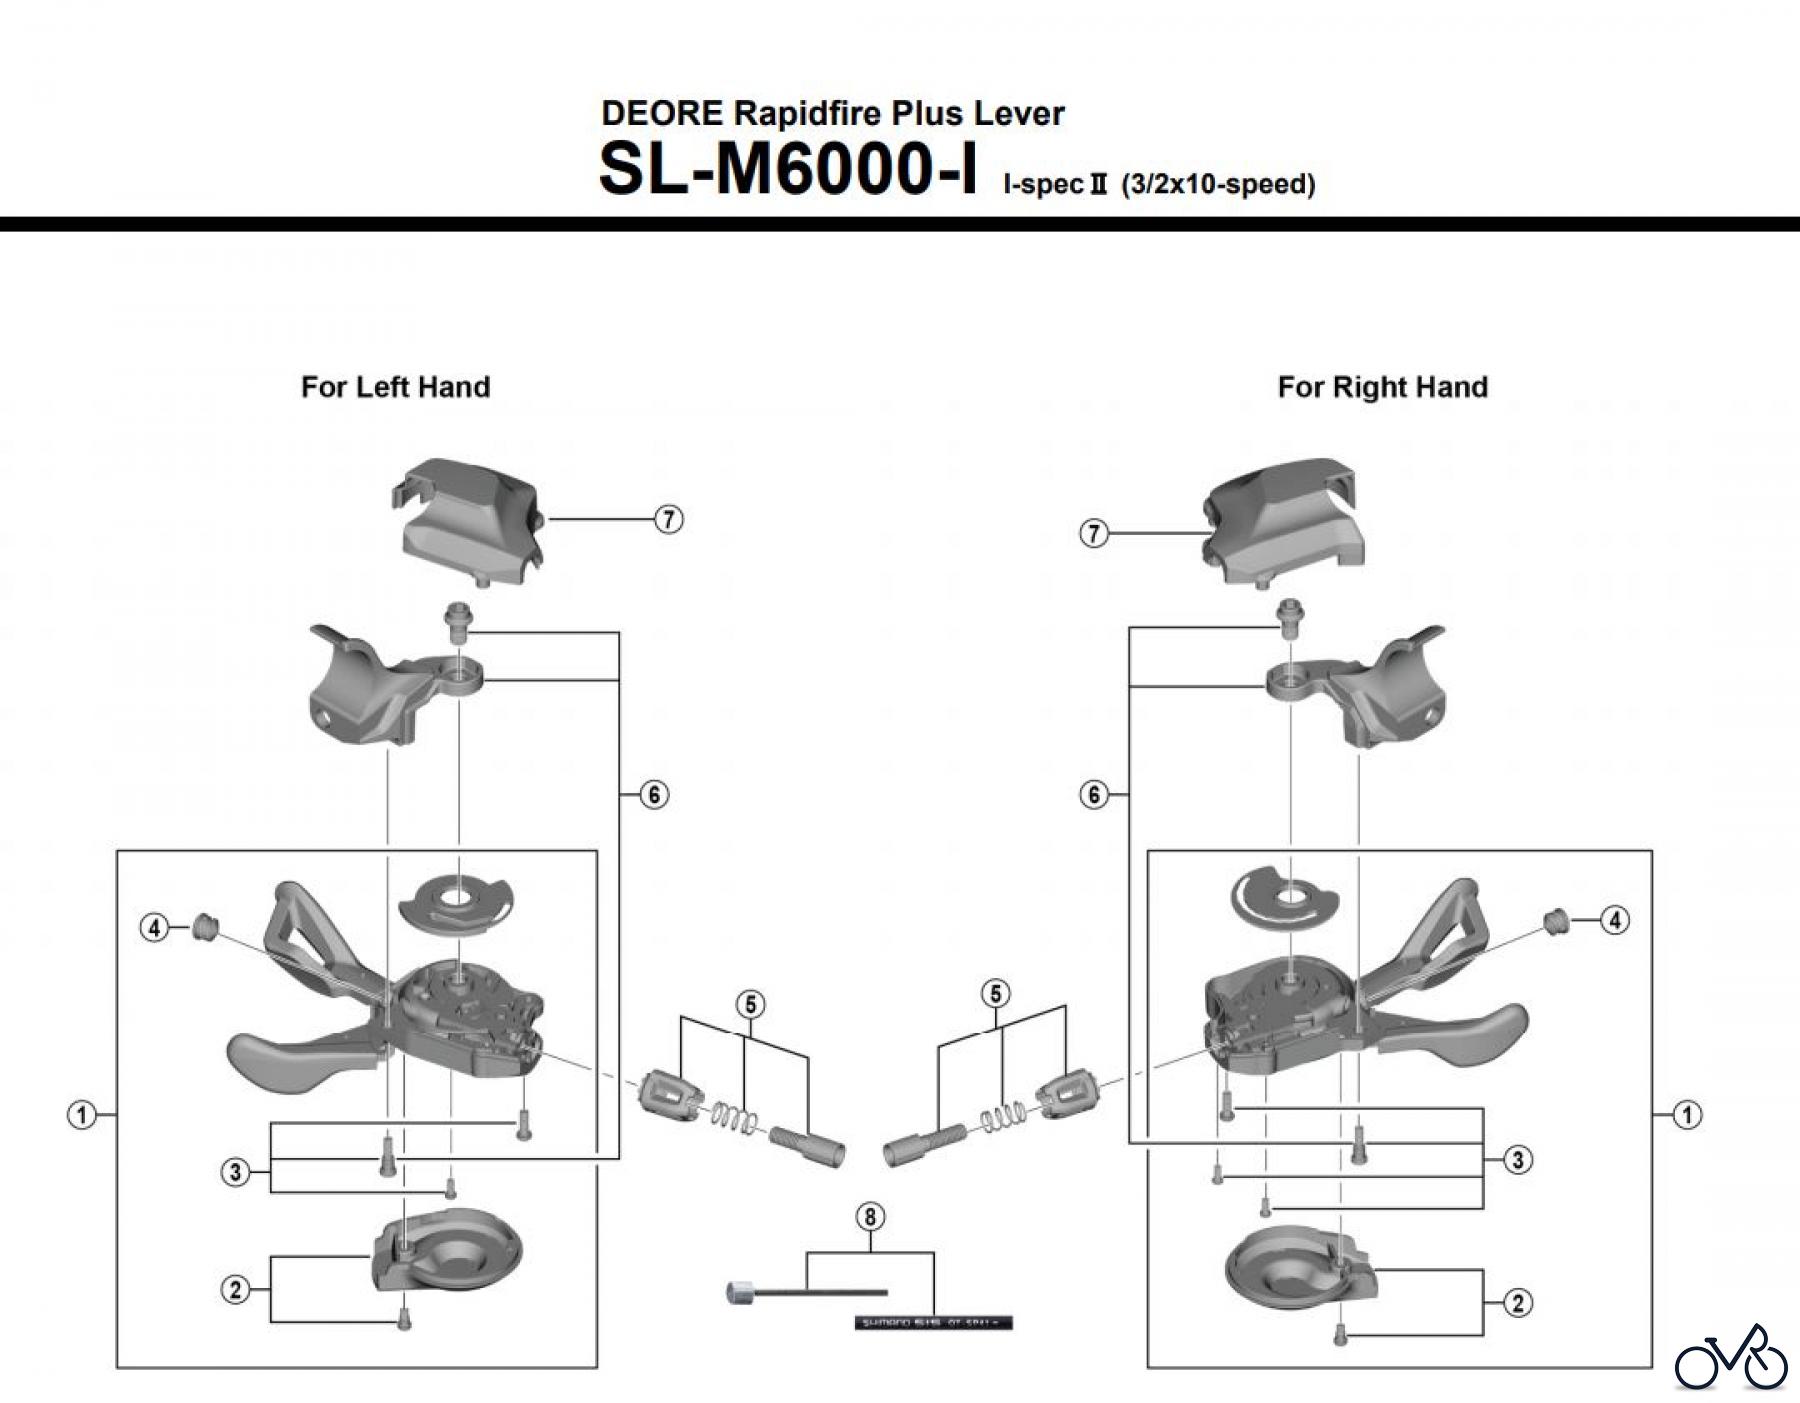  Shimano SL Shift Lever - Schalthebel SL-M6000-I I-4190 DEORE Rapidfire Plus Lever